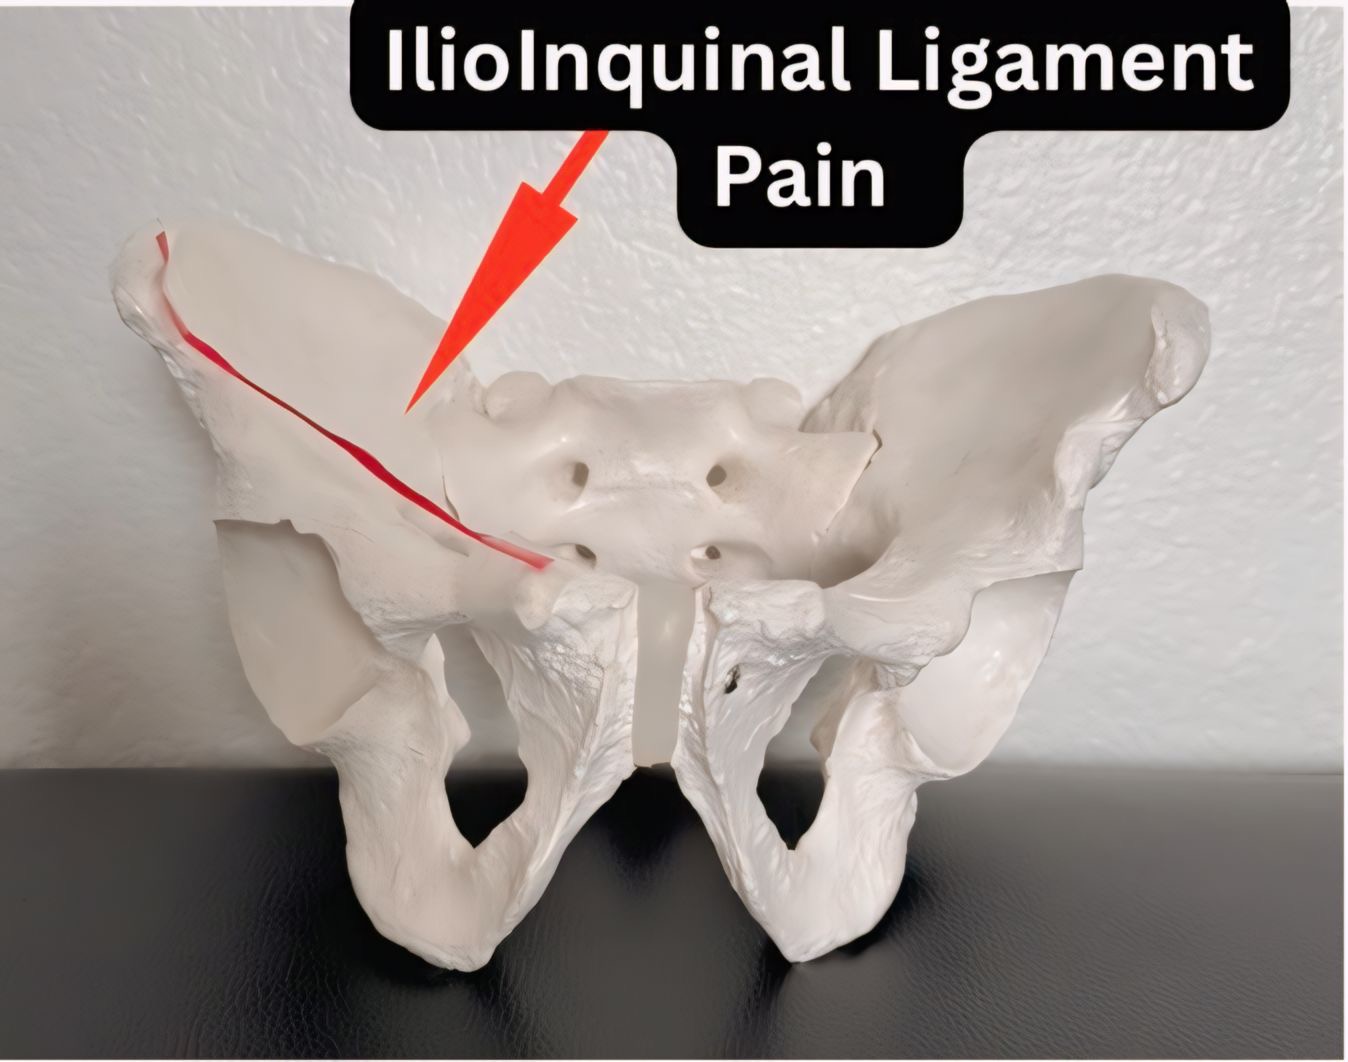 Ilioinguinal Ligament Pain: Relieve Groin Pain with Ilioinguinal